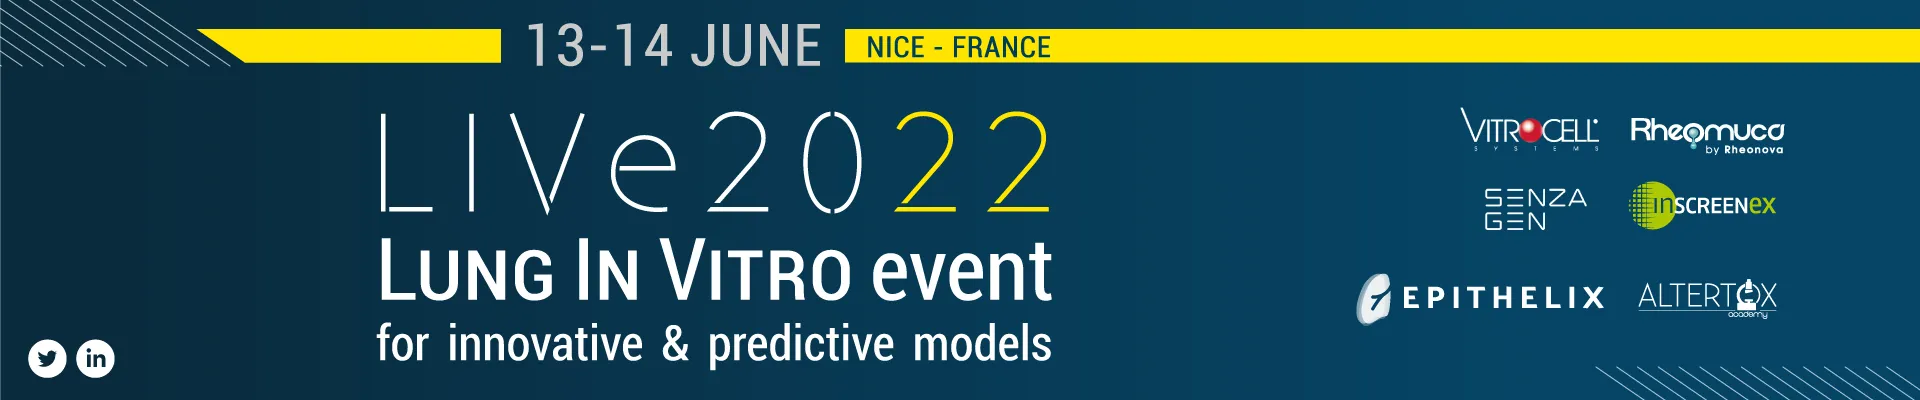 LIVe 2022 – Lung in vitro event for innovative & predictive models